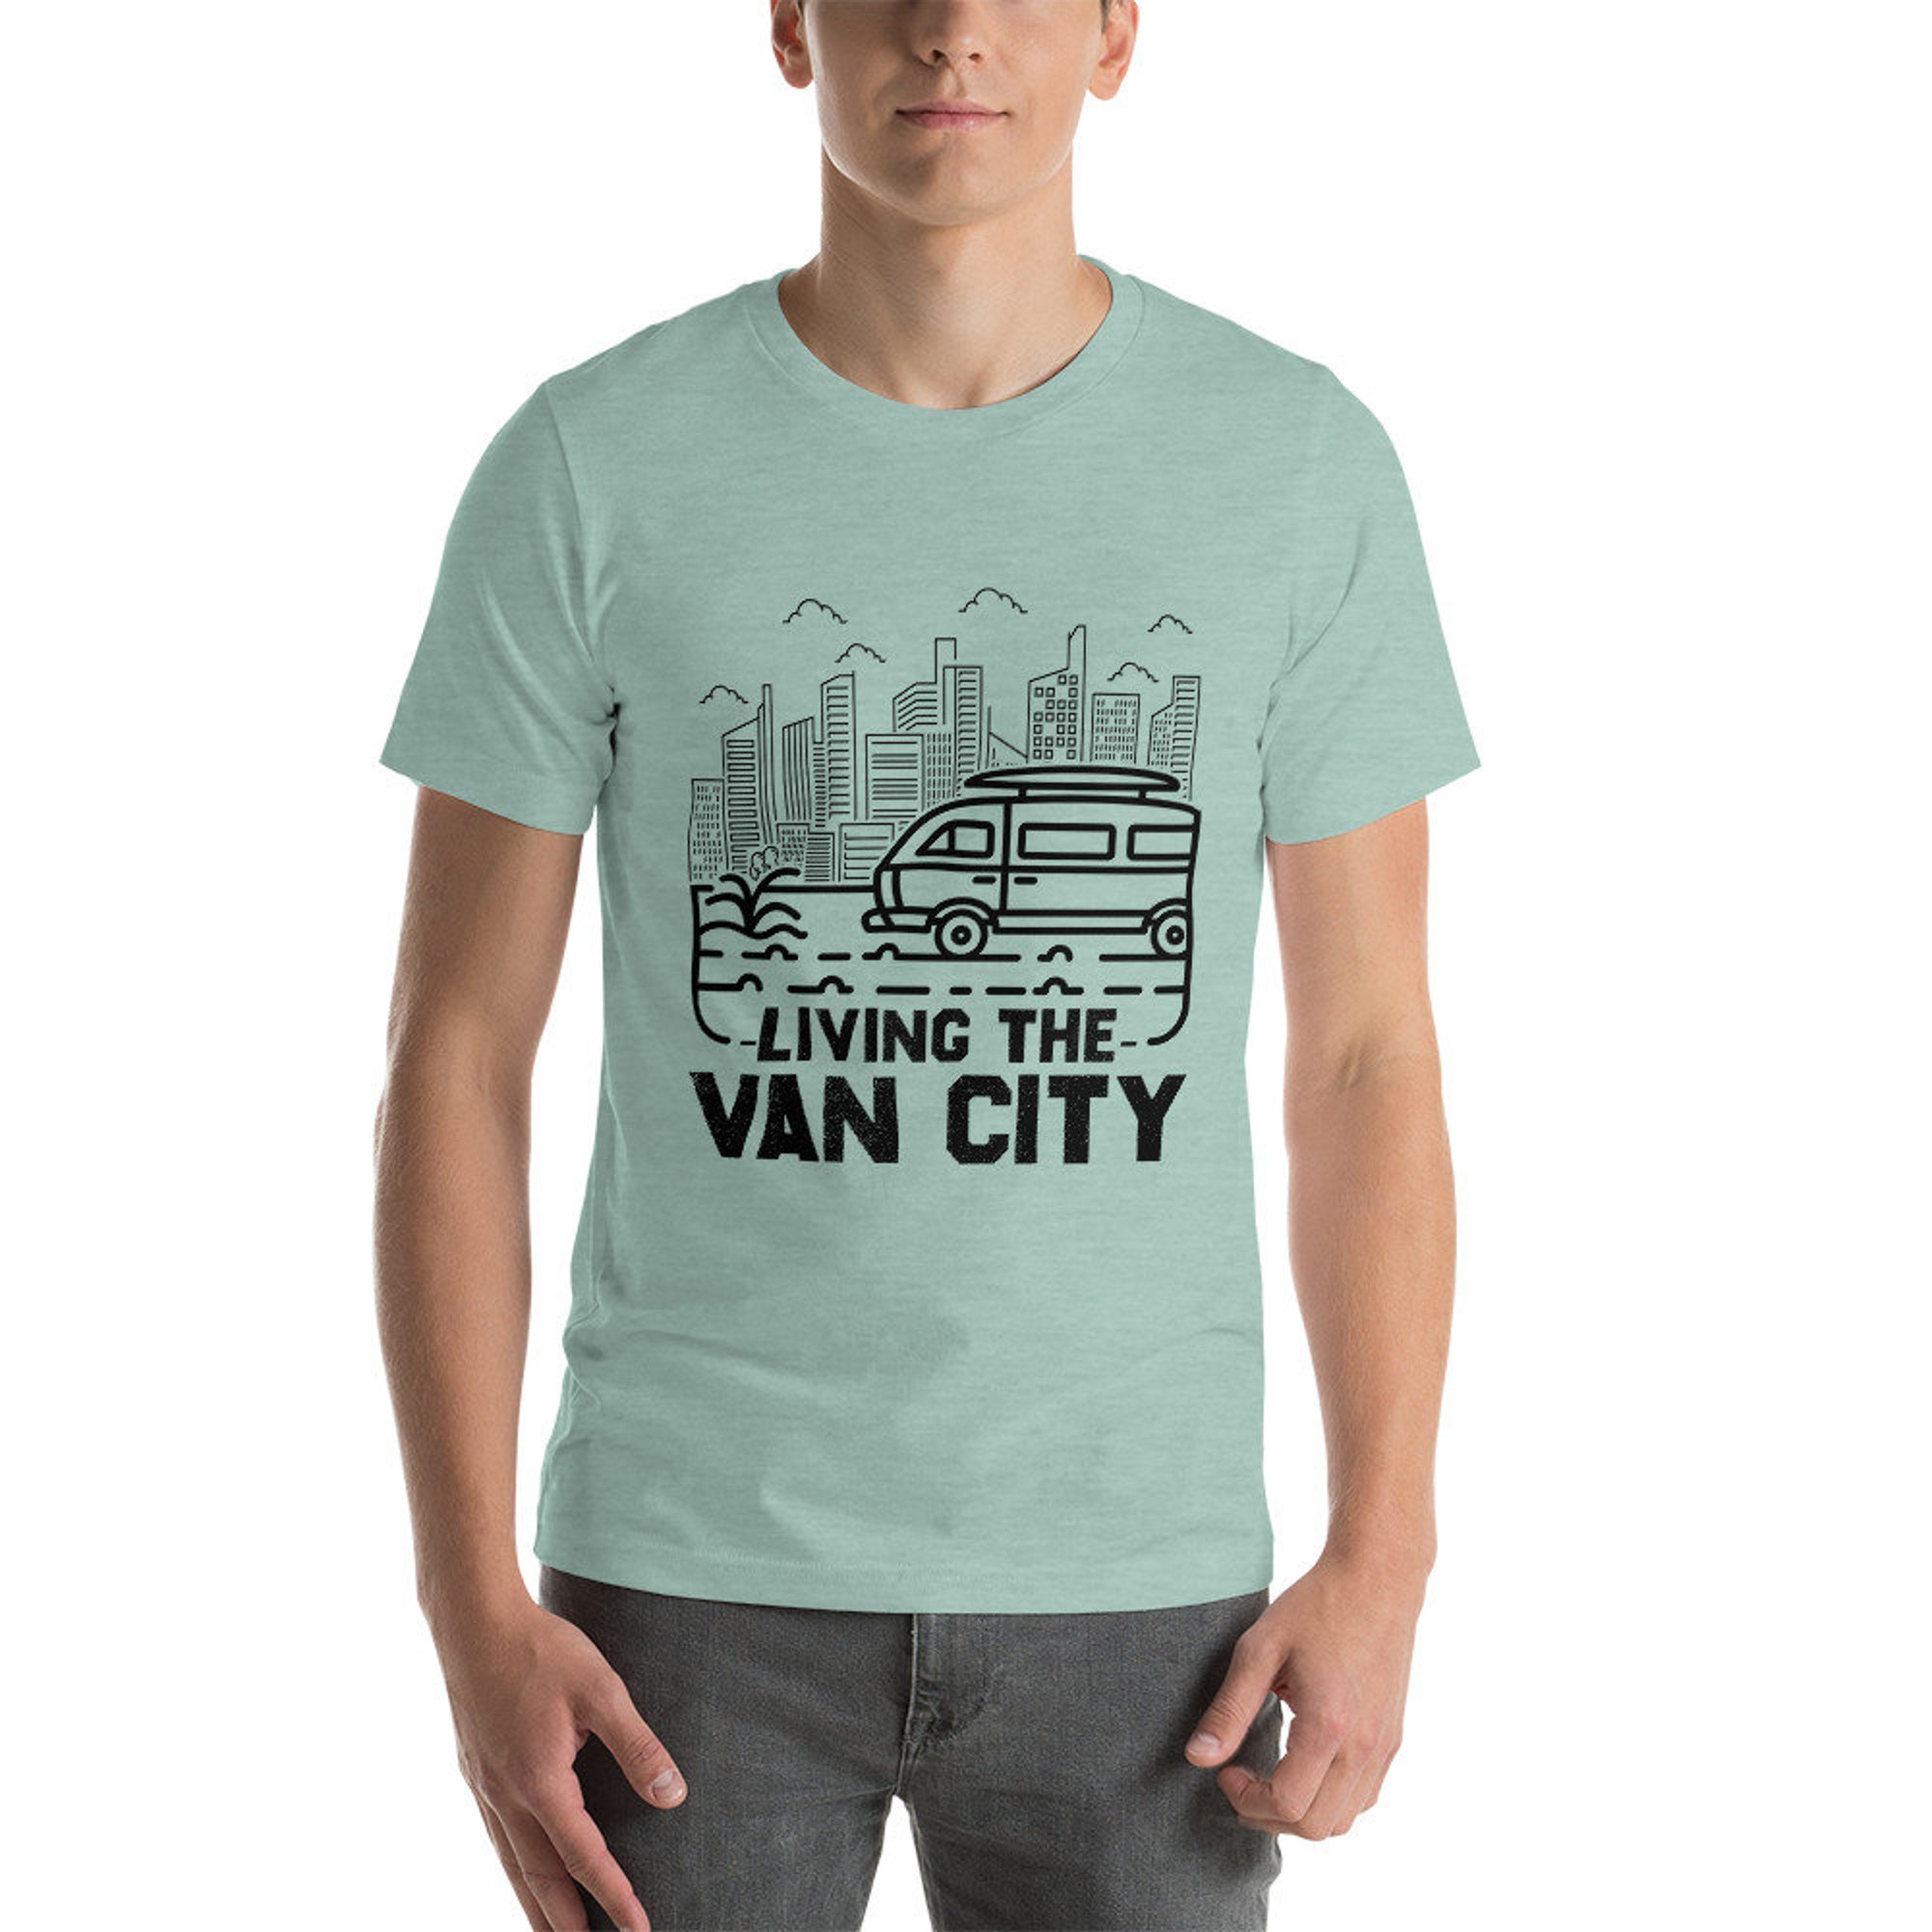 Discover Living The Van City T-Shirt, Van Life Shirt, Living Van Life Shirt, RV Shirt, Campervan Shirt, Road Trip Shirt, Traveler Shirt, Outdoor Gift